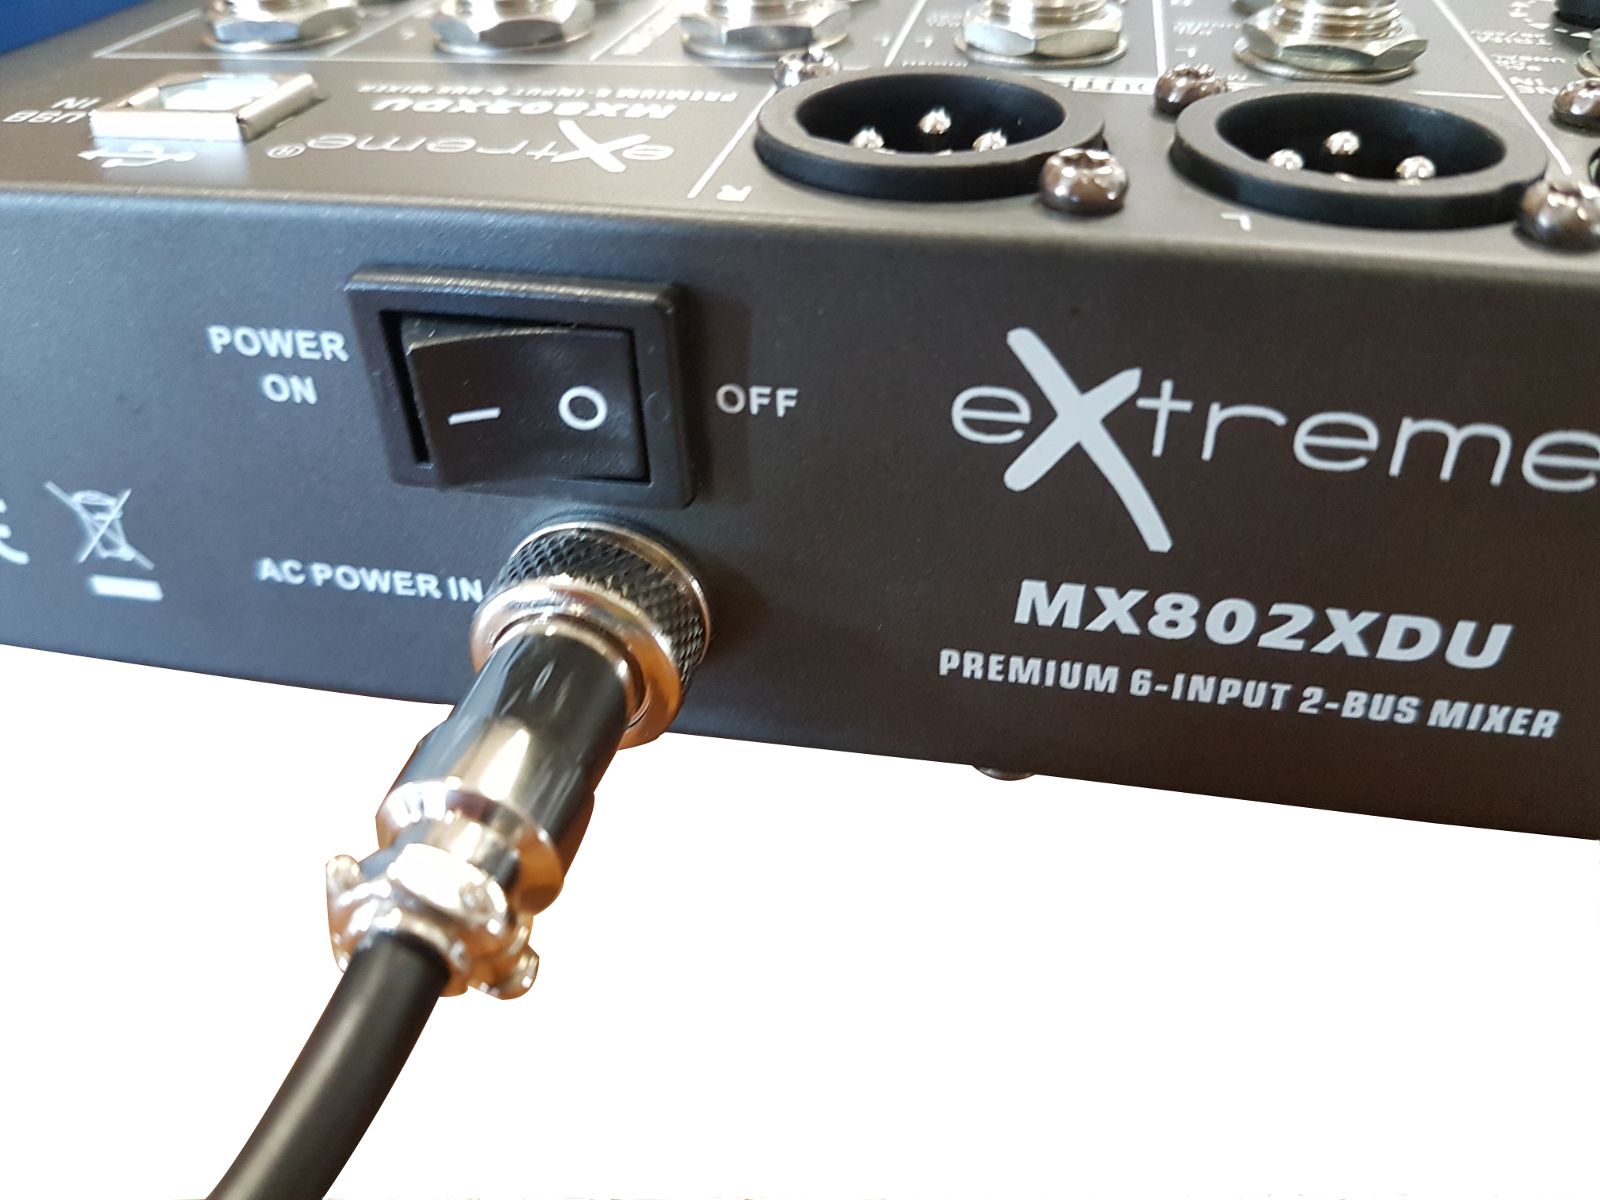 EXTREME MX802XDU MIXER 4 CANALI COMPATTO PER LIVE PHANTOM POWER +48V OUT XLR + EFFETTI DSP + USB 3